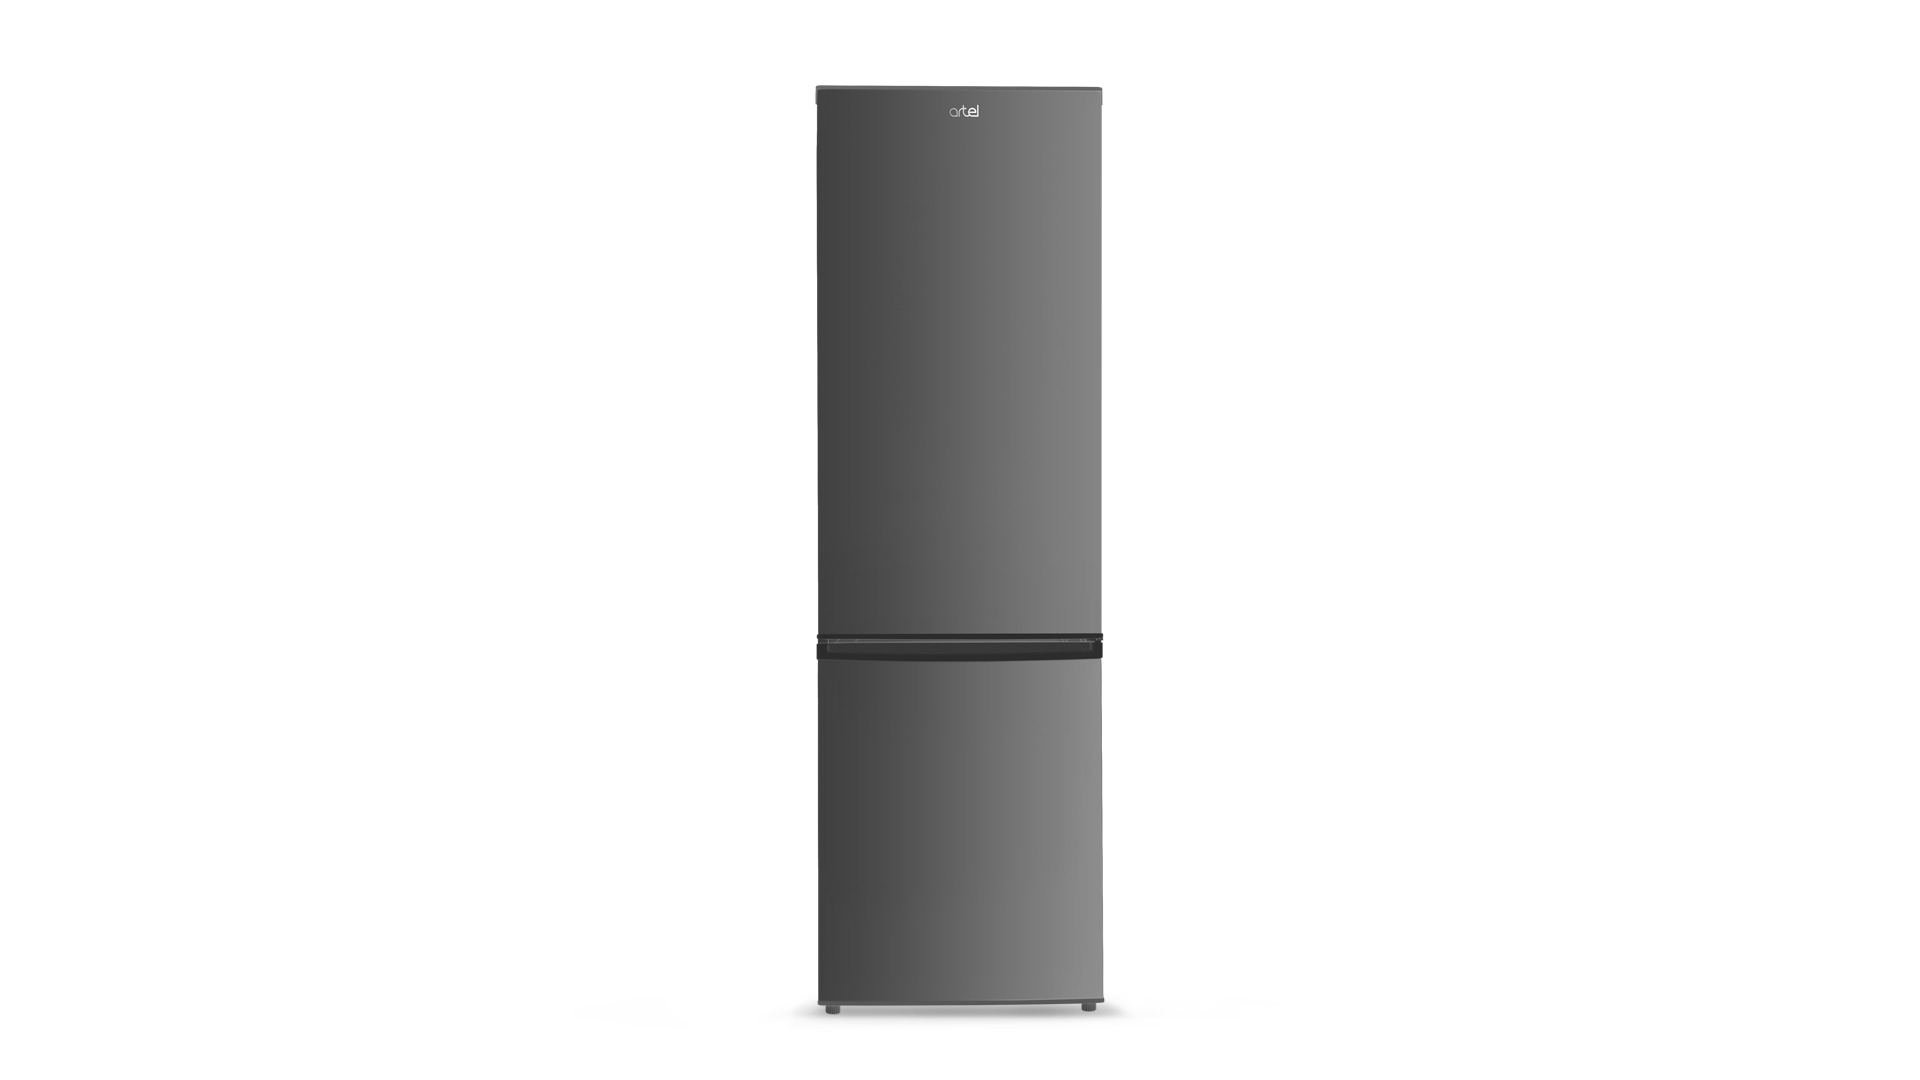 Артель производитель. Холодильник Artel hd345rn s серый.